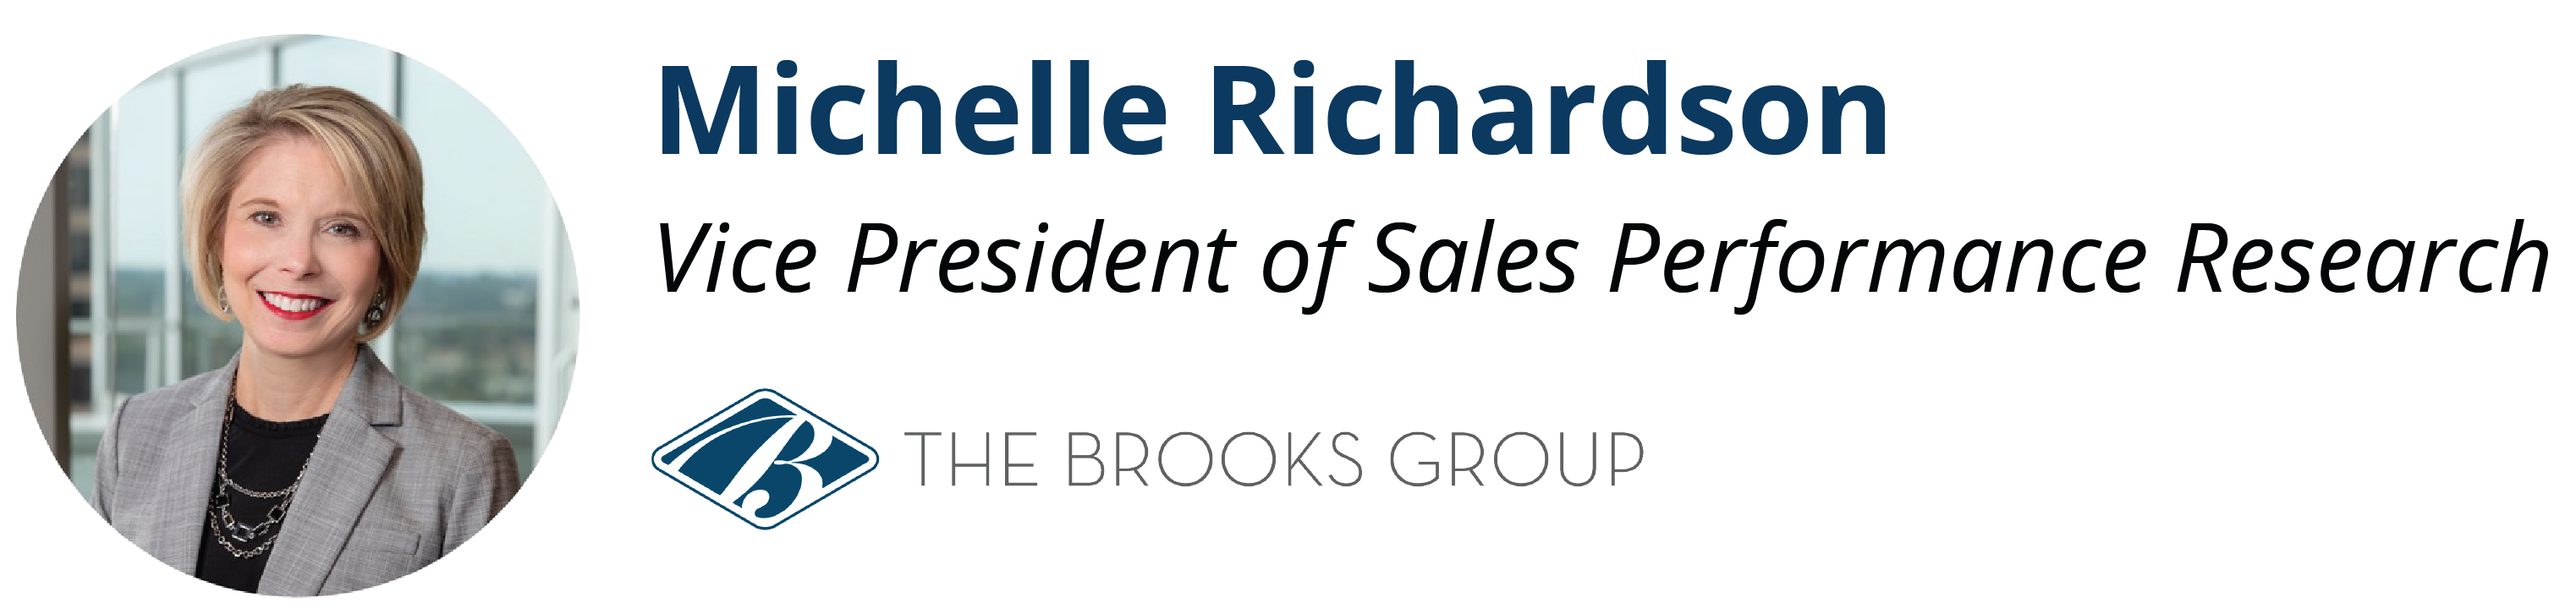 Michelle Richardson The Brooks Group